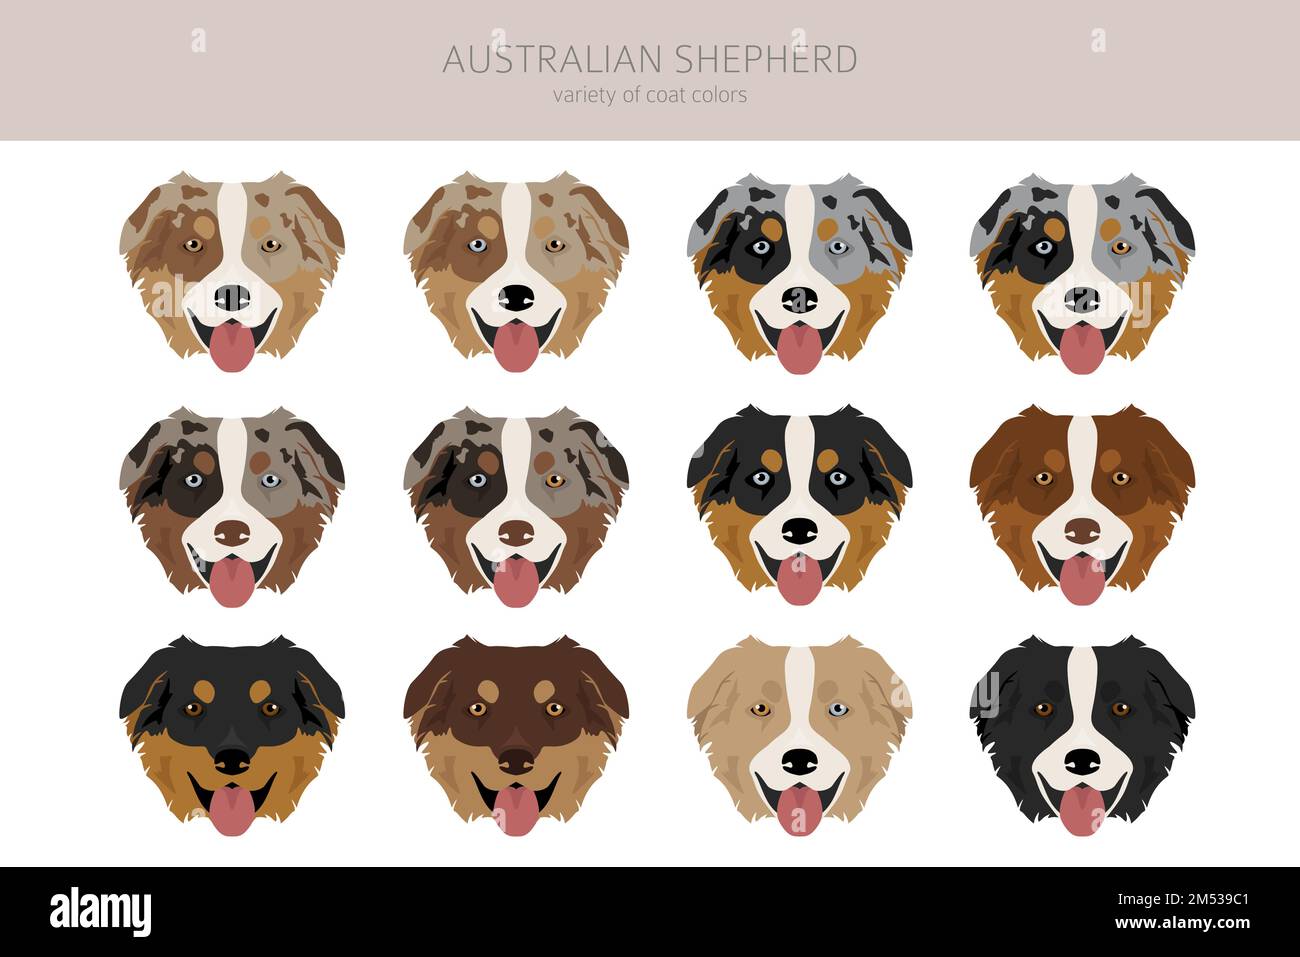 Australian shepherd clipart. Coat colors Aussie set.  All dog breeds characteristics infographic. Vector illustration Stock Vector